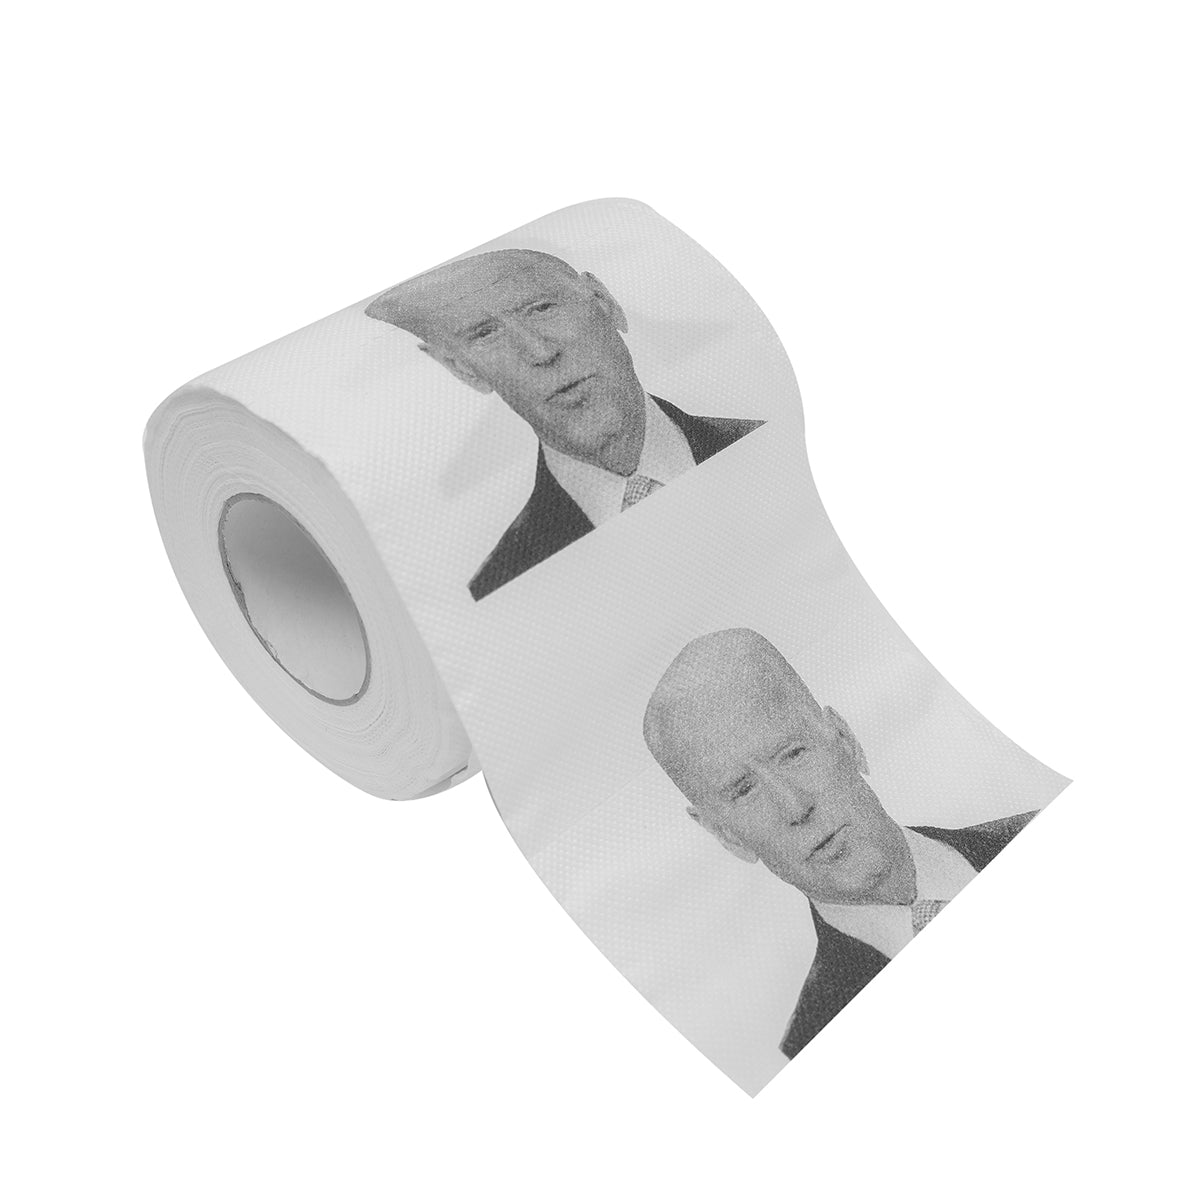 Creative Toilet Paper Roll Prank Joke Joe Biden Printed Paper